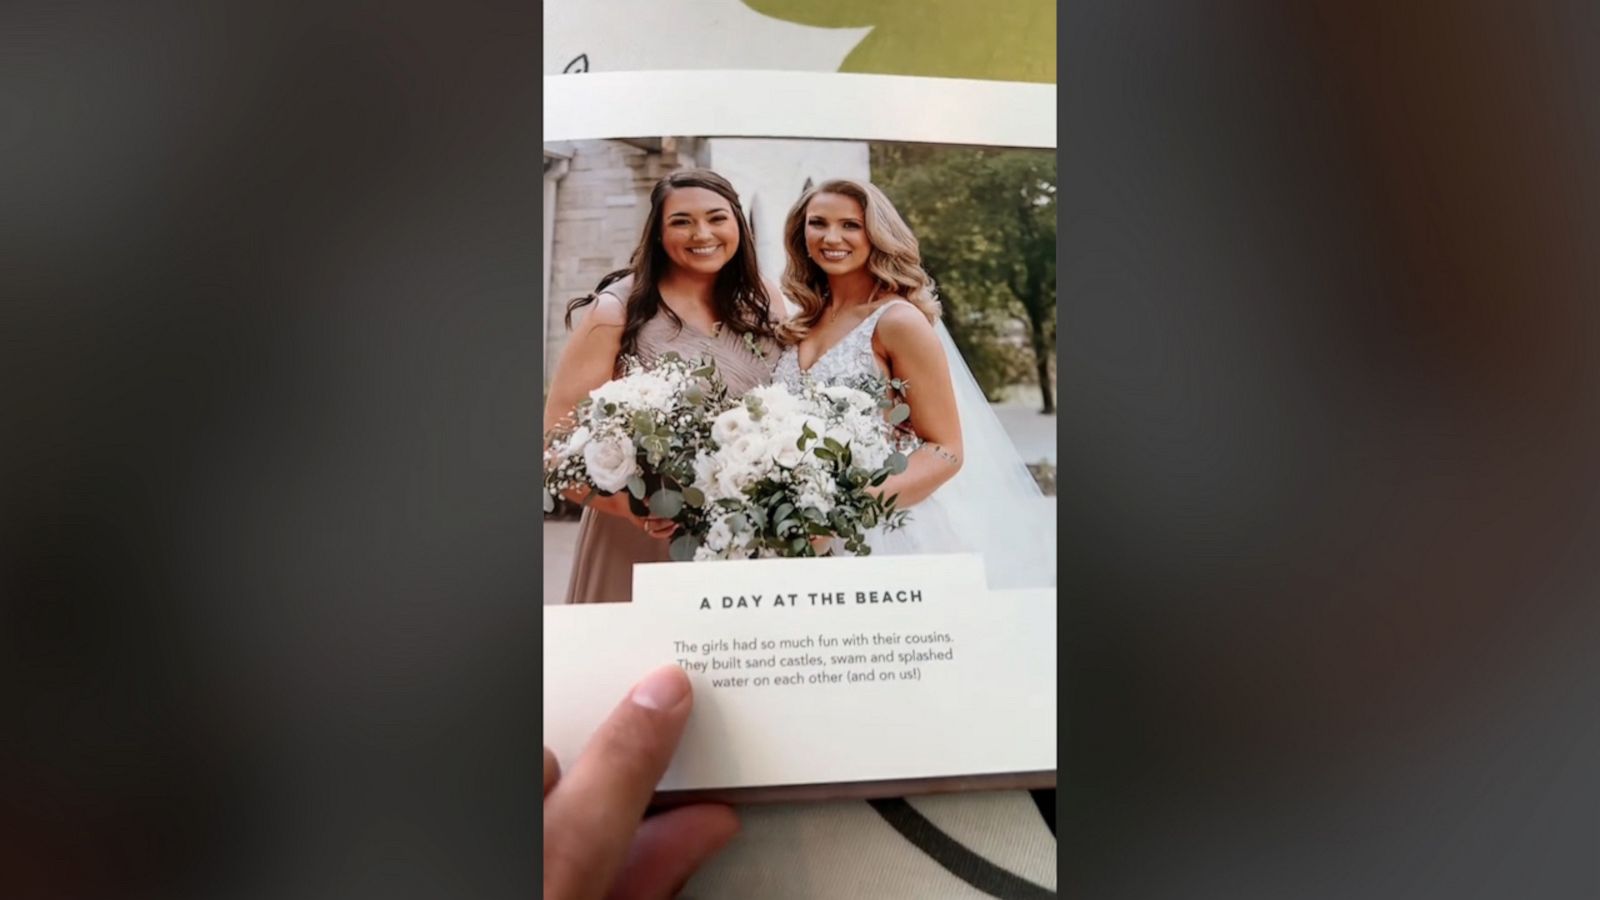 VIDEO: Bride shares wedding photo book fail in hilarious video